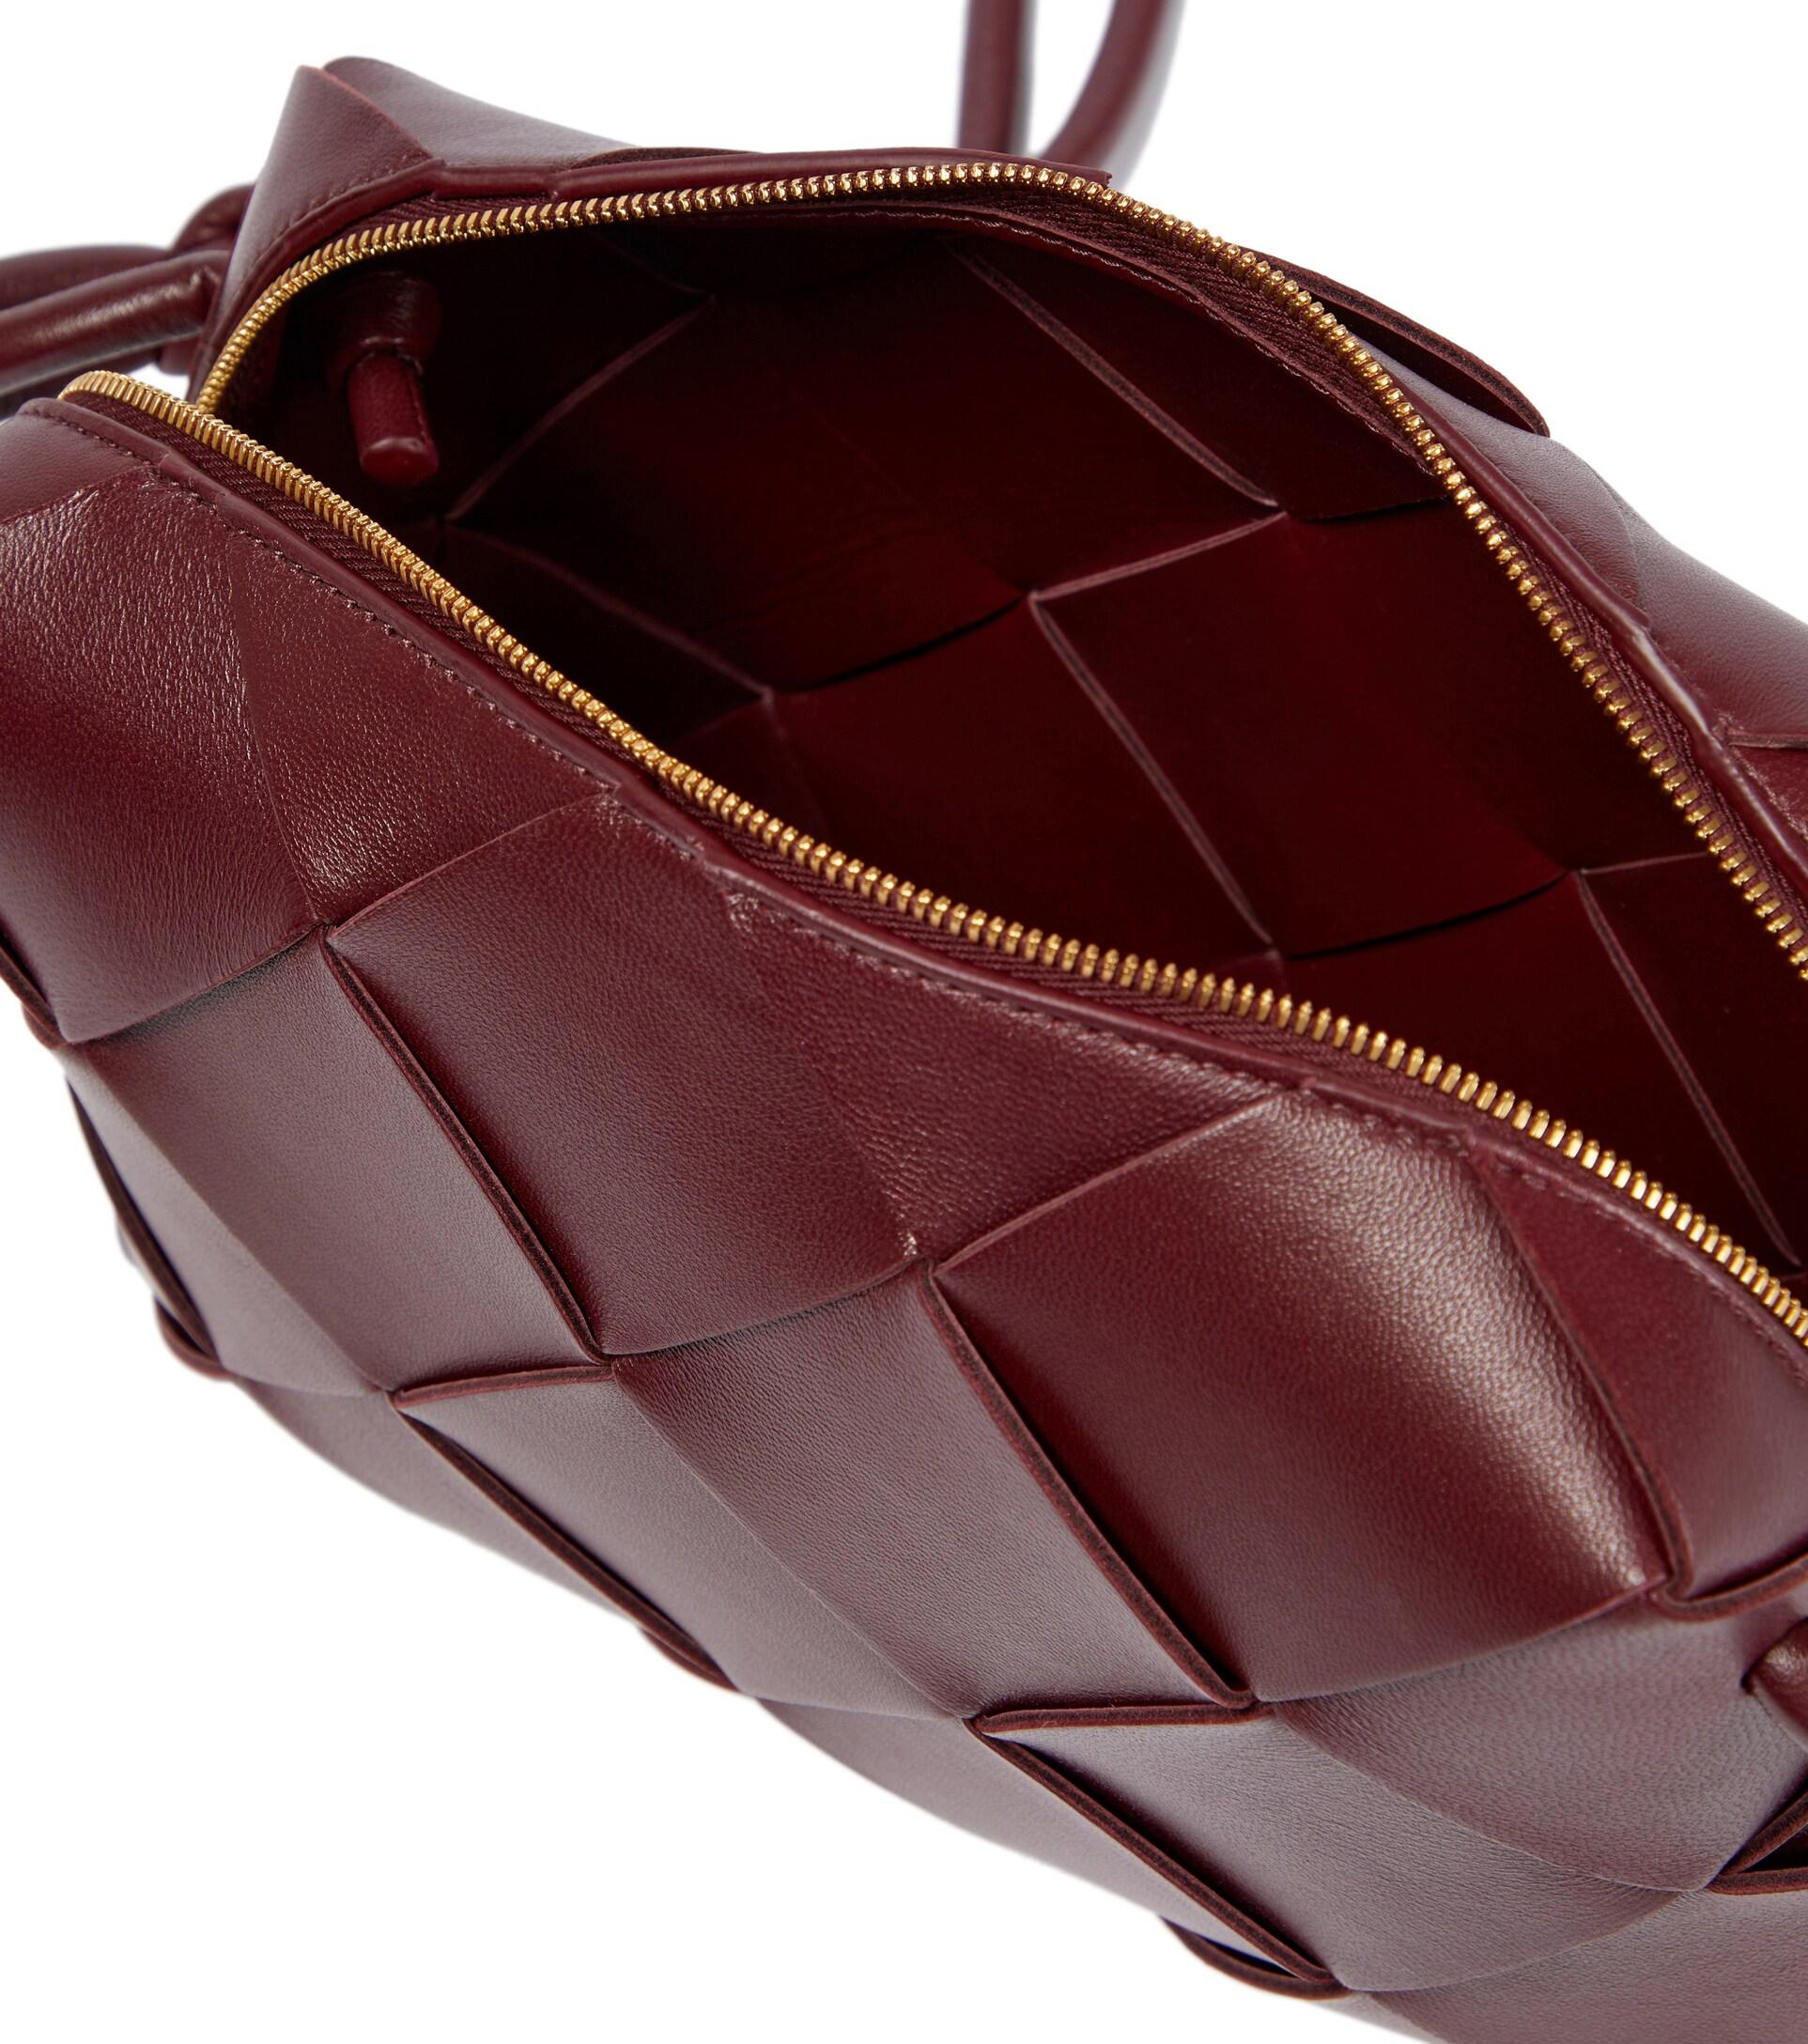 BOTTEGA VENETA Loop small intrecciato leather shoulder bag